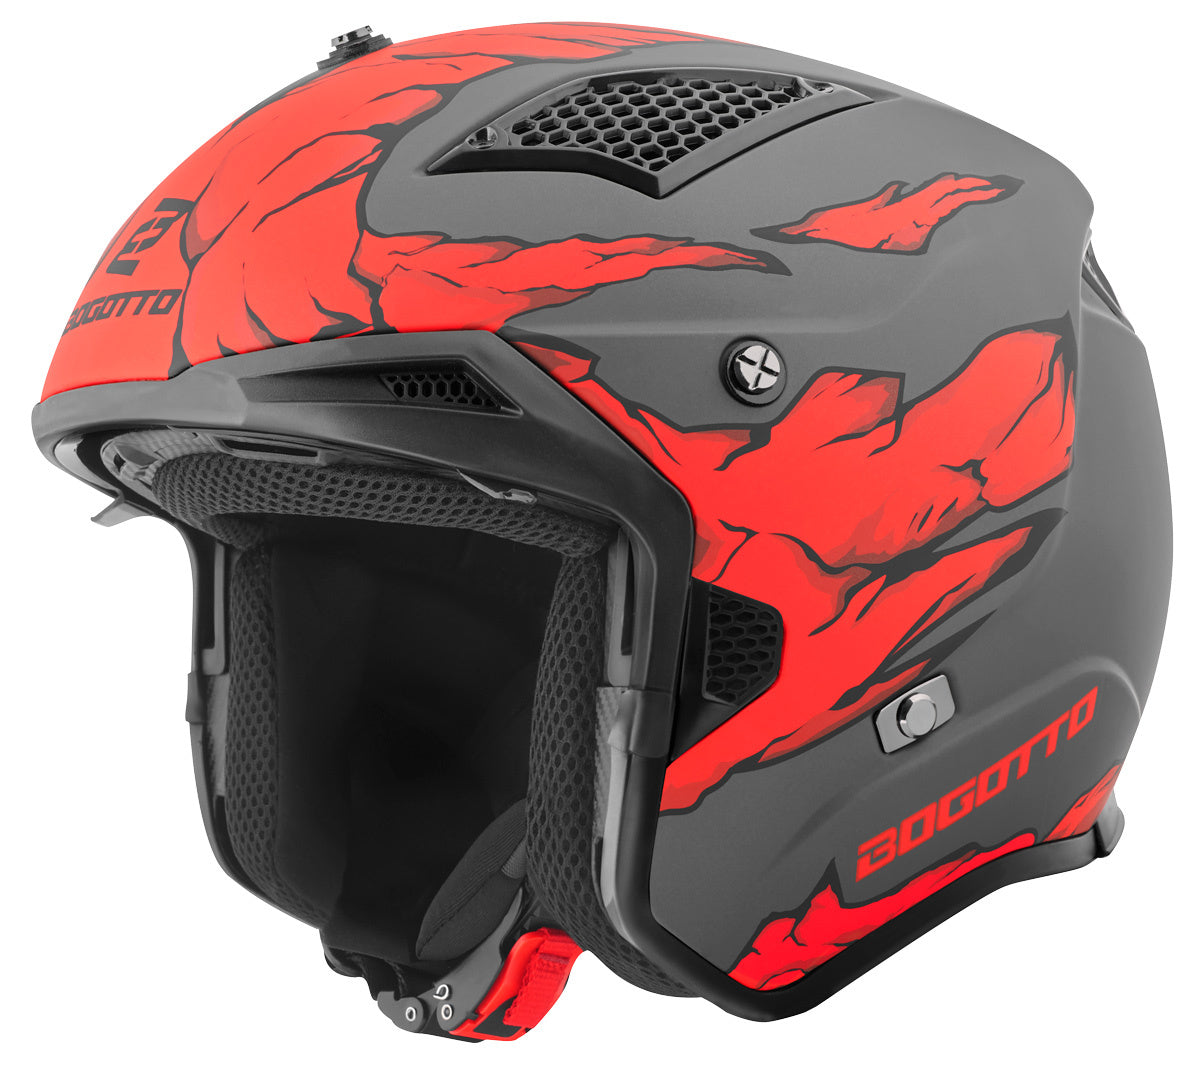 Bogotto Radic Skulash Helmet#color_red-black